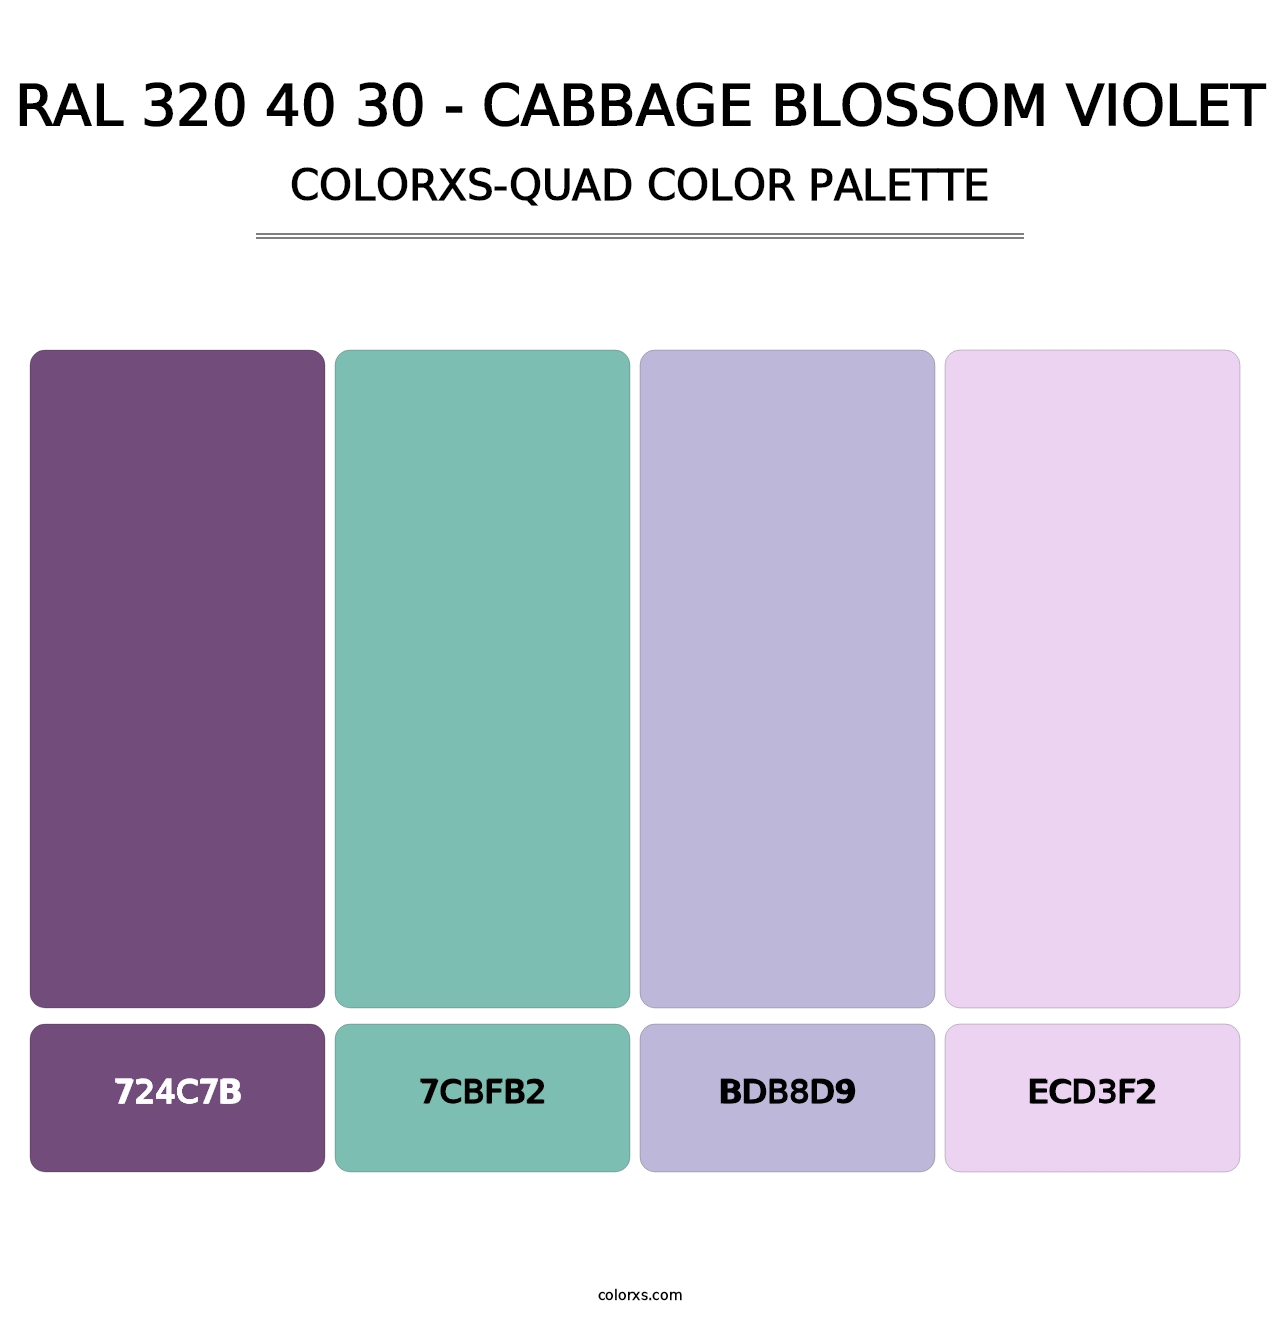 RAL 320 40 30 - Cabbage Blossom Violet - Colorxs Quad Palette